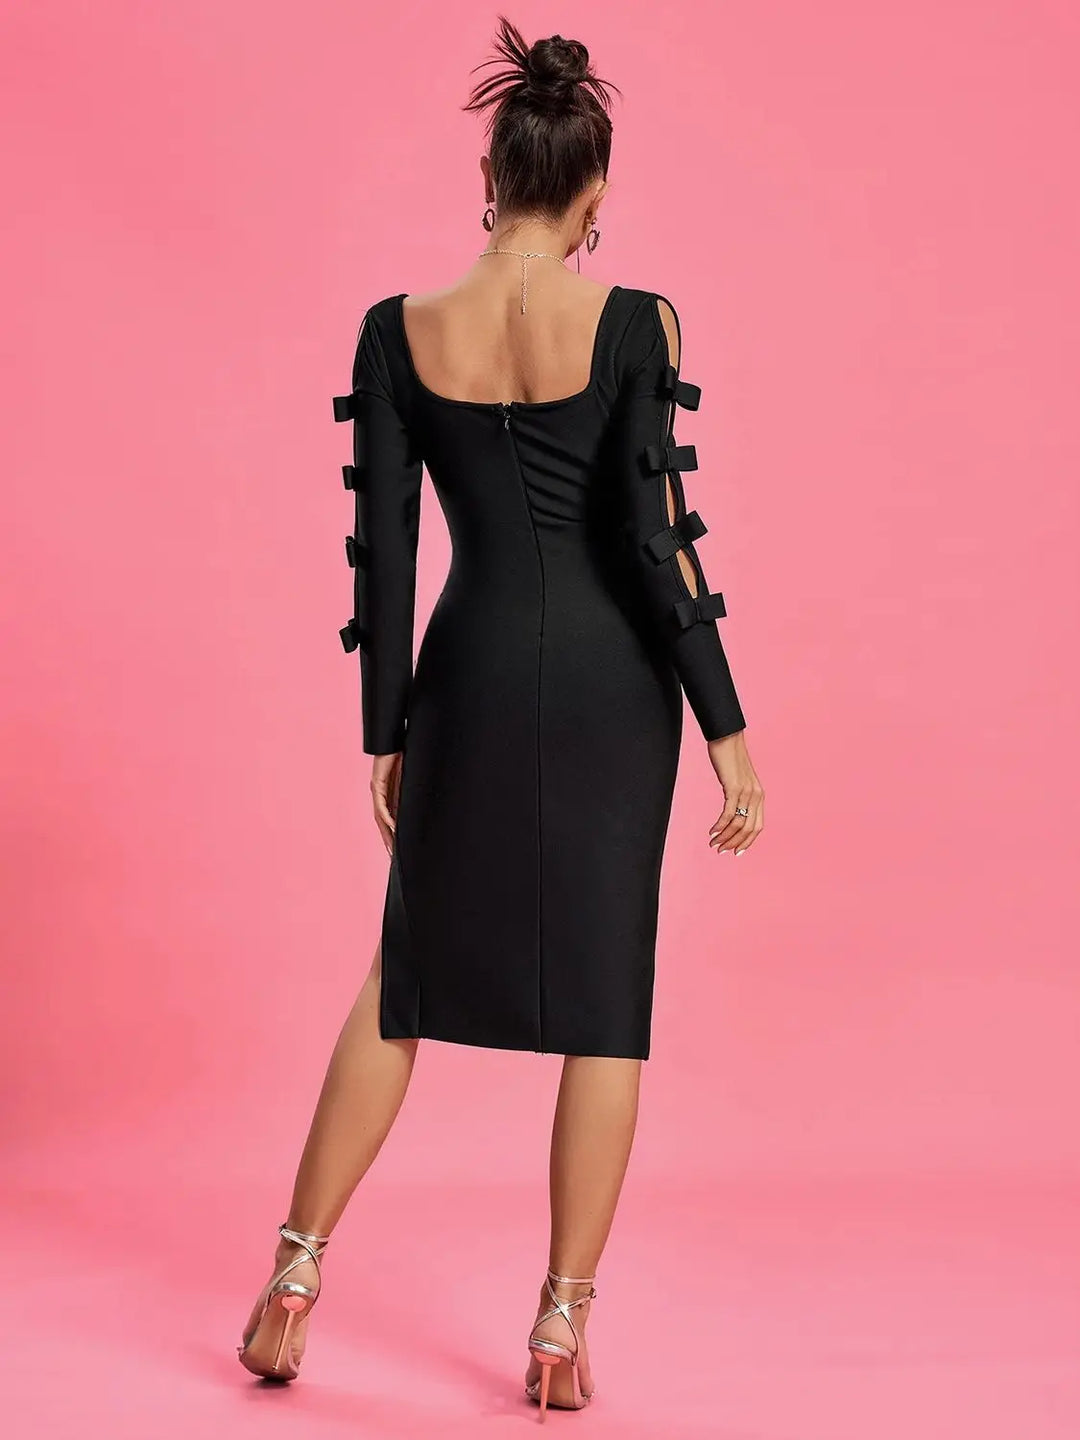 Elegant Black Women's Bodycon Dress